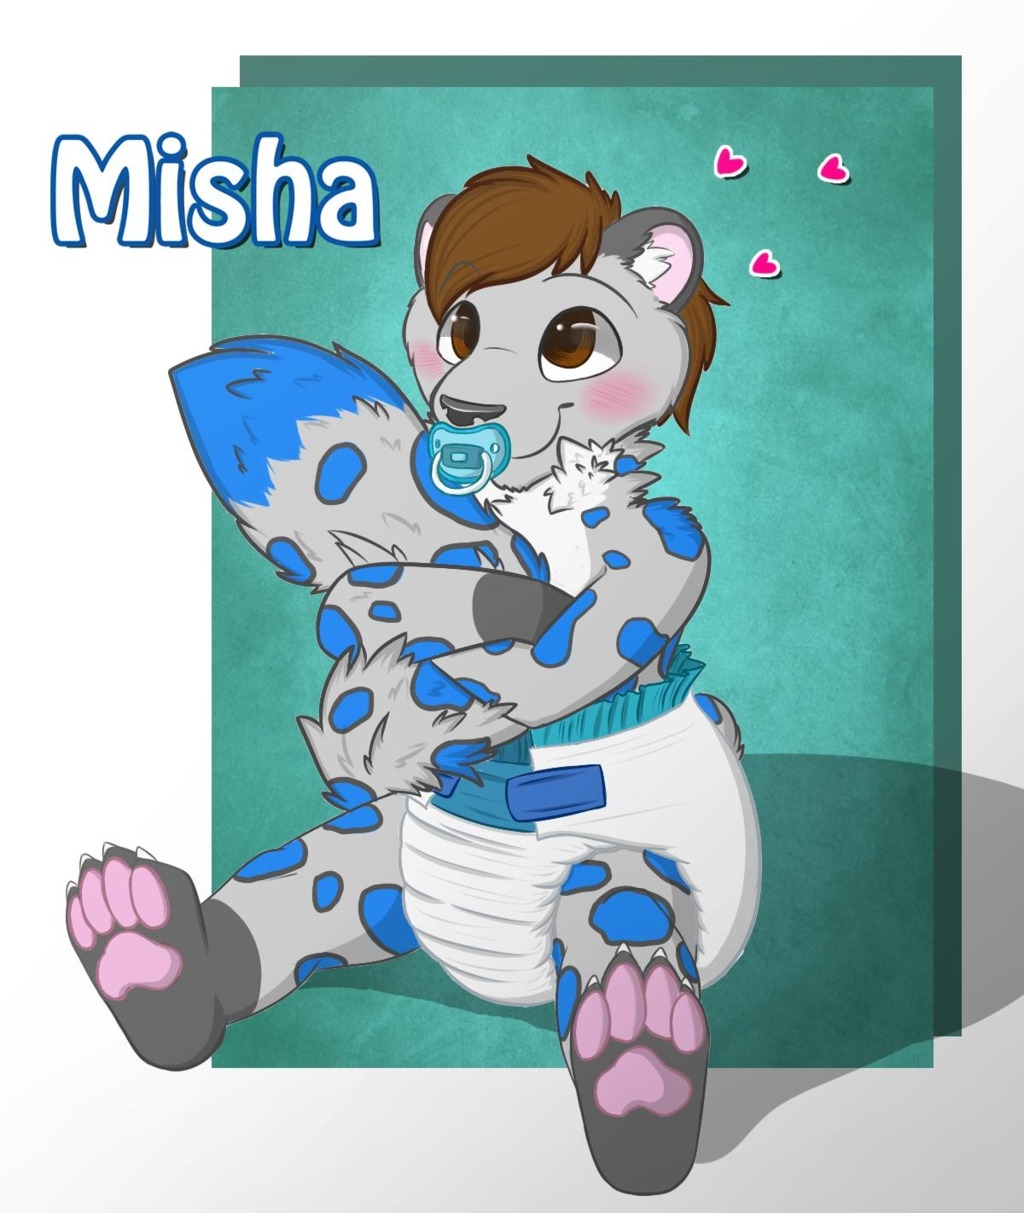 Most recent image: Misha badge by Yuni Wusky